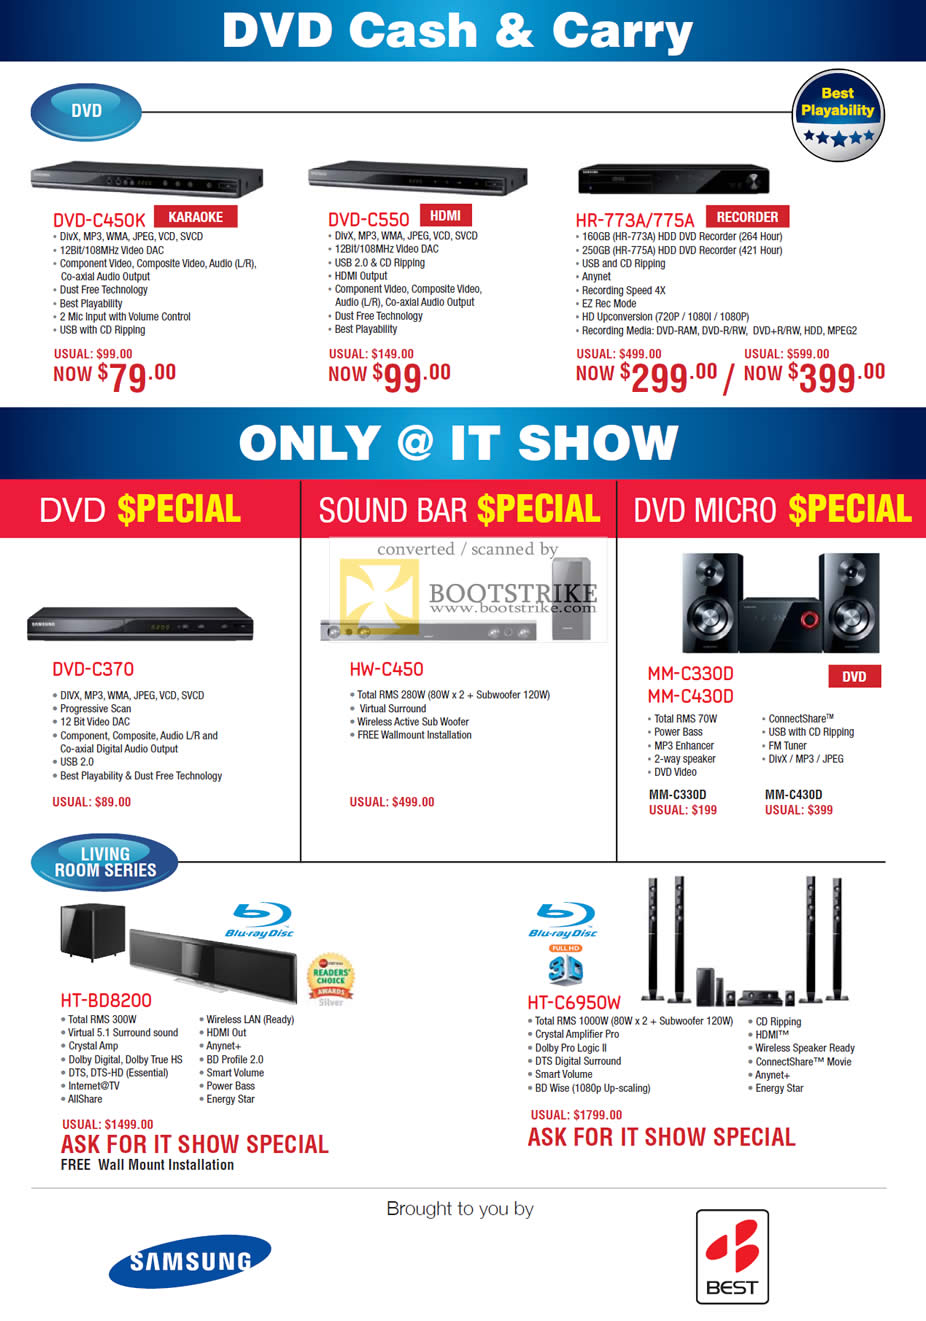 IT Show 2011 price list image brochure of Samsung DVD Players DVD-C450K DVD-C550 HR-773A 775A DVD-C370 HW-C450 MM-C330D MM-430D HT-BD8200 HT-C6950W Best Denki